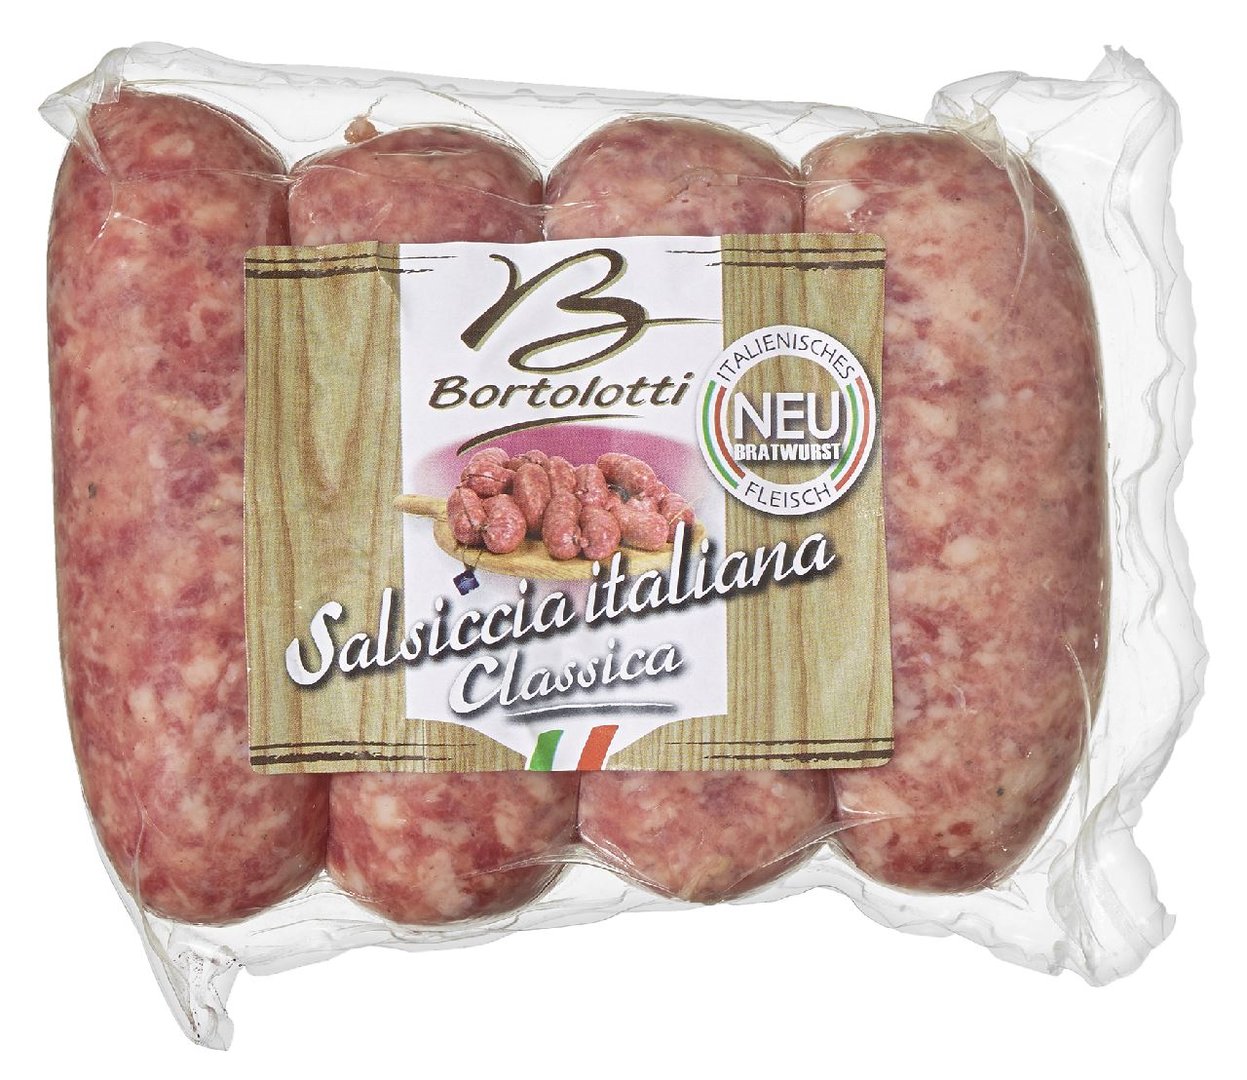 Bortolotti - Salsiccia italiana classica gekühlt vak.-verpackt - 350 g Packung